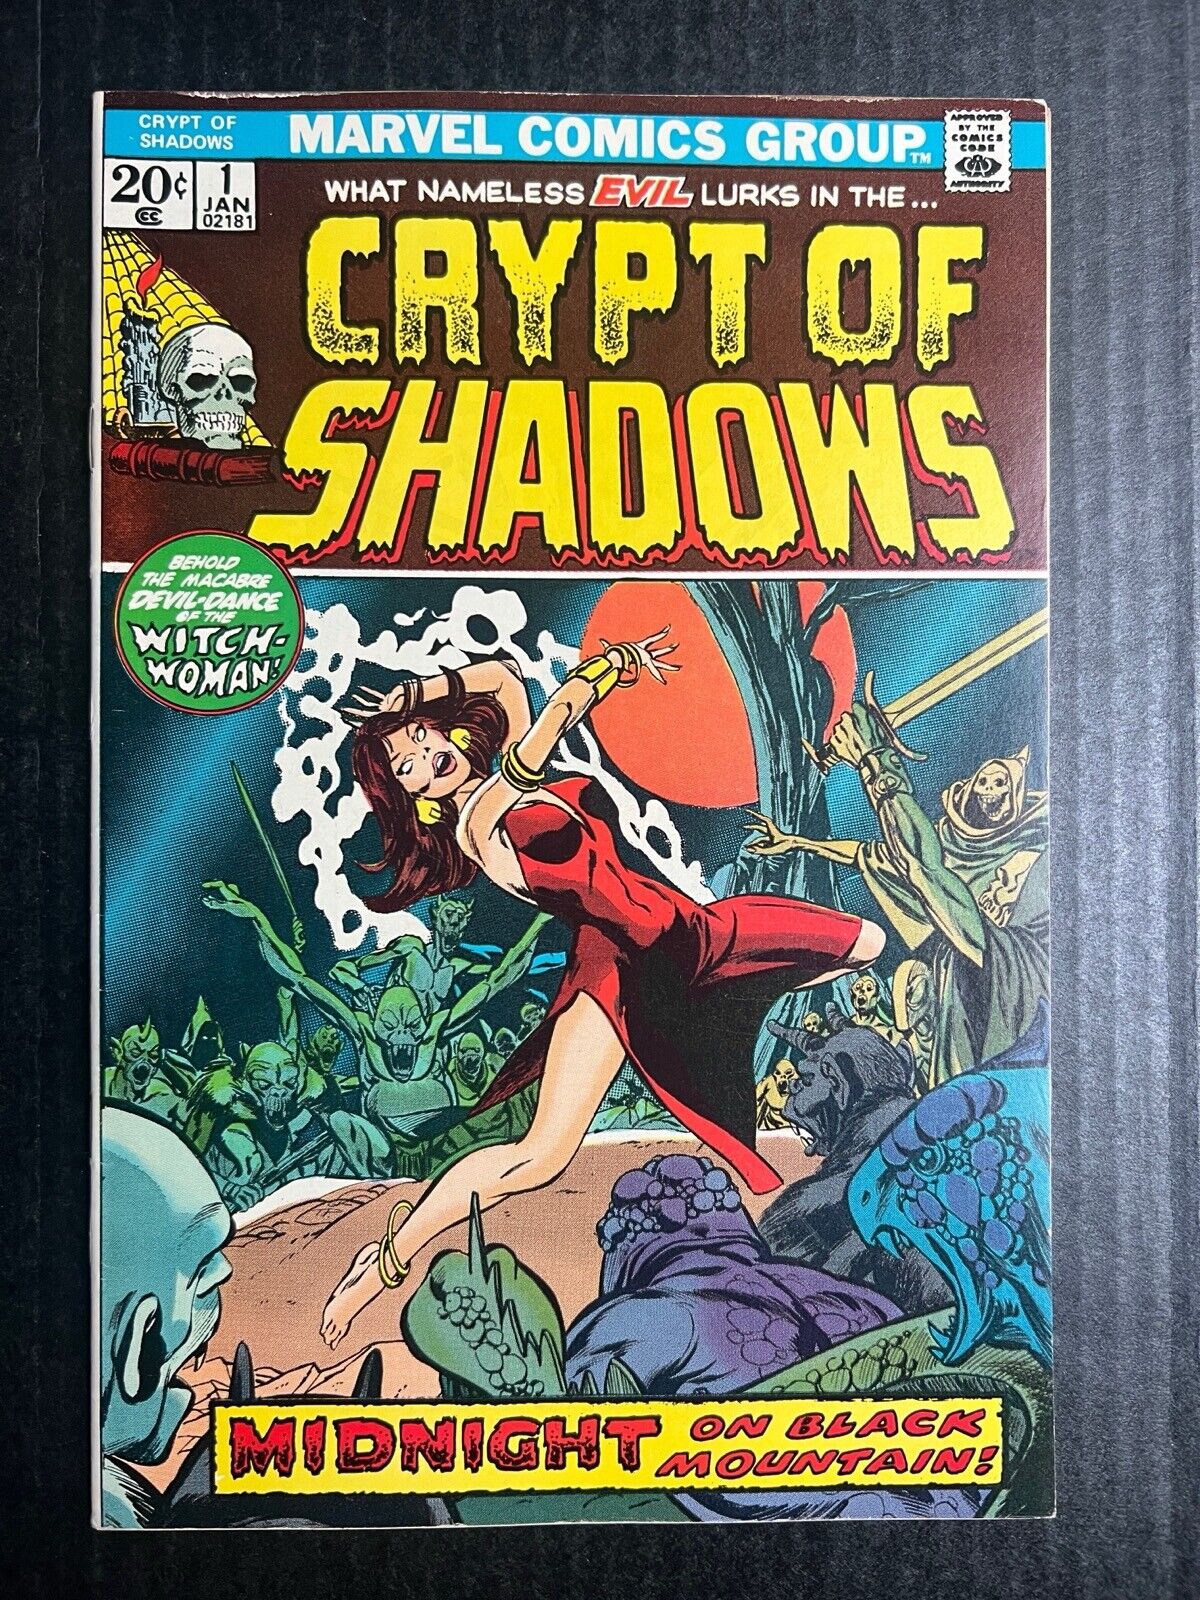 CRYPT OF SHADOWS #1 January 1973 Vintage Horror Marvel Comics